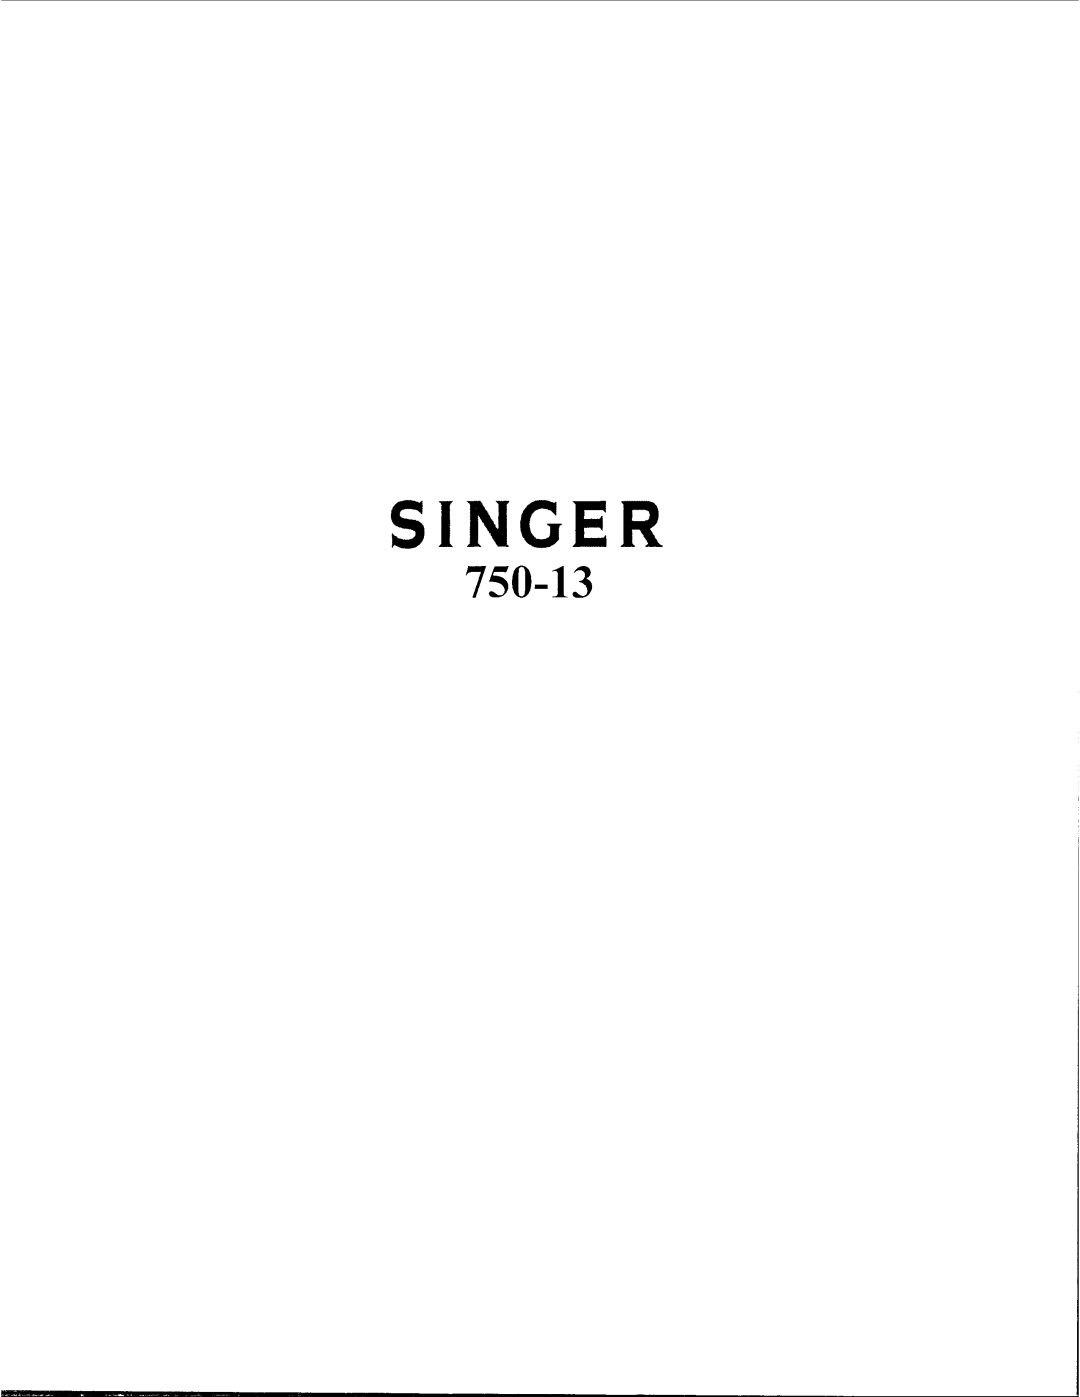 Singer 750-13 manual 